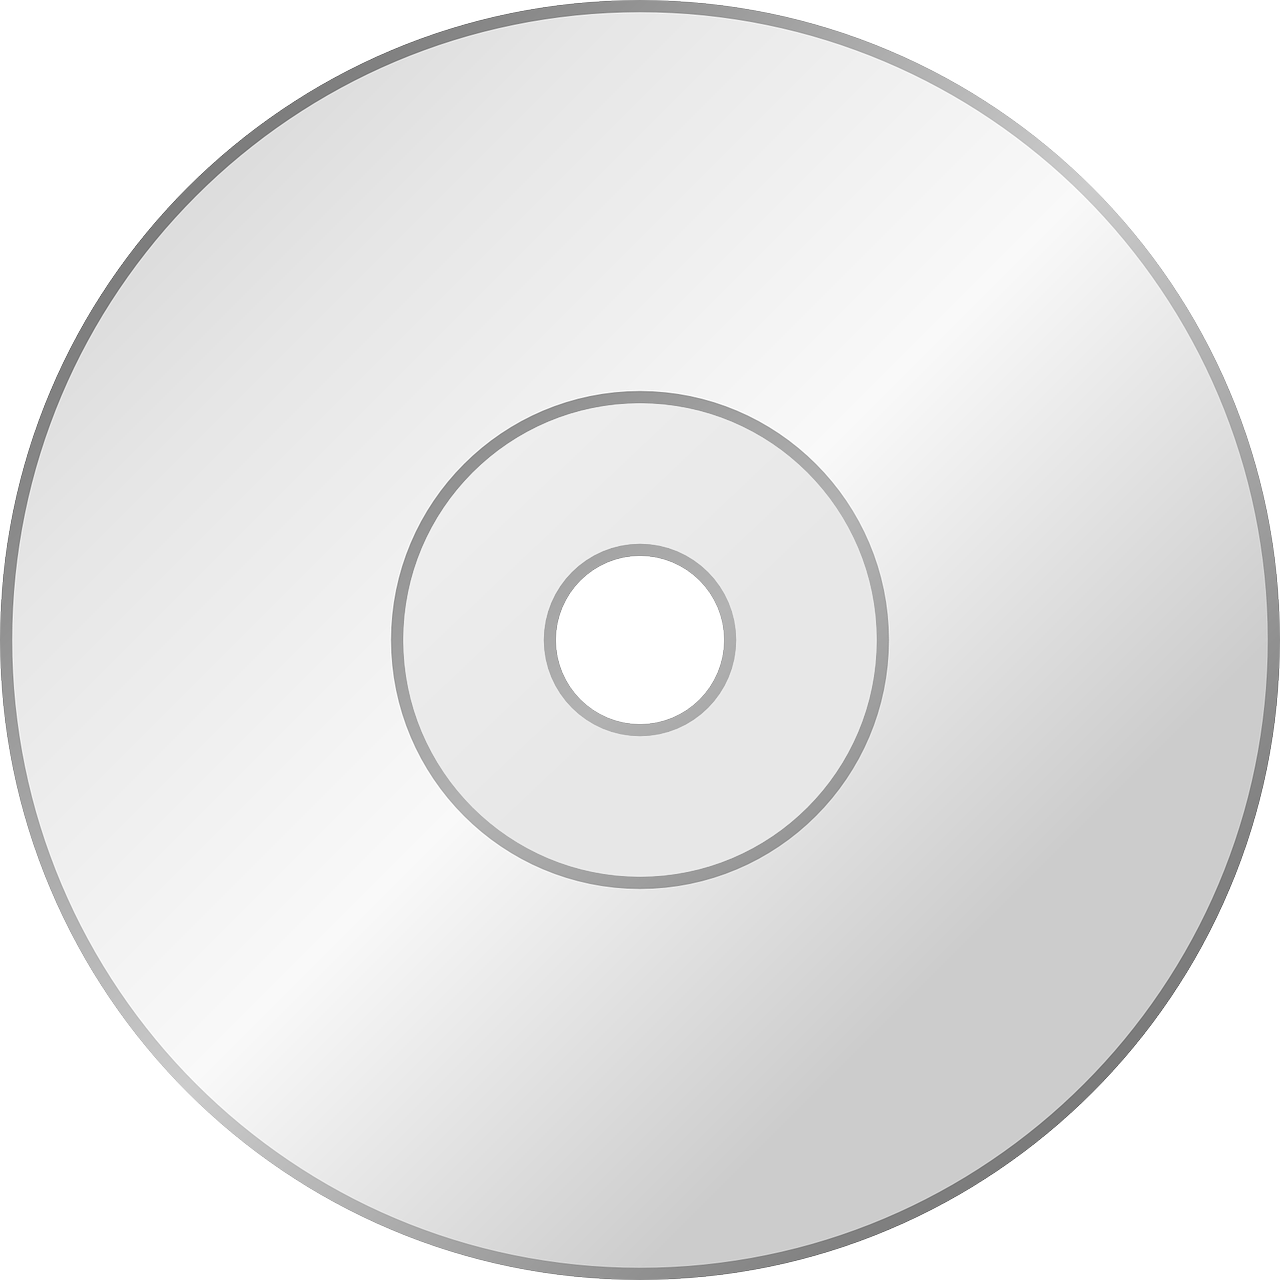 CD PNG Image